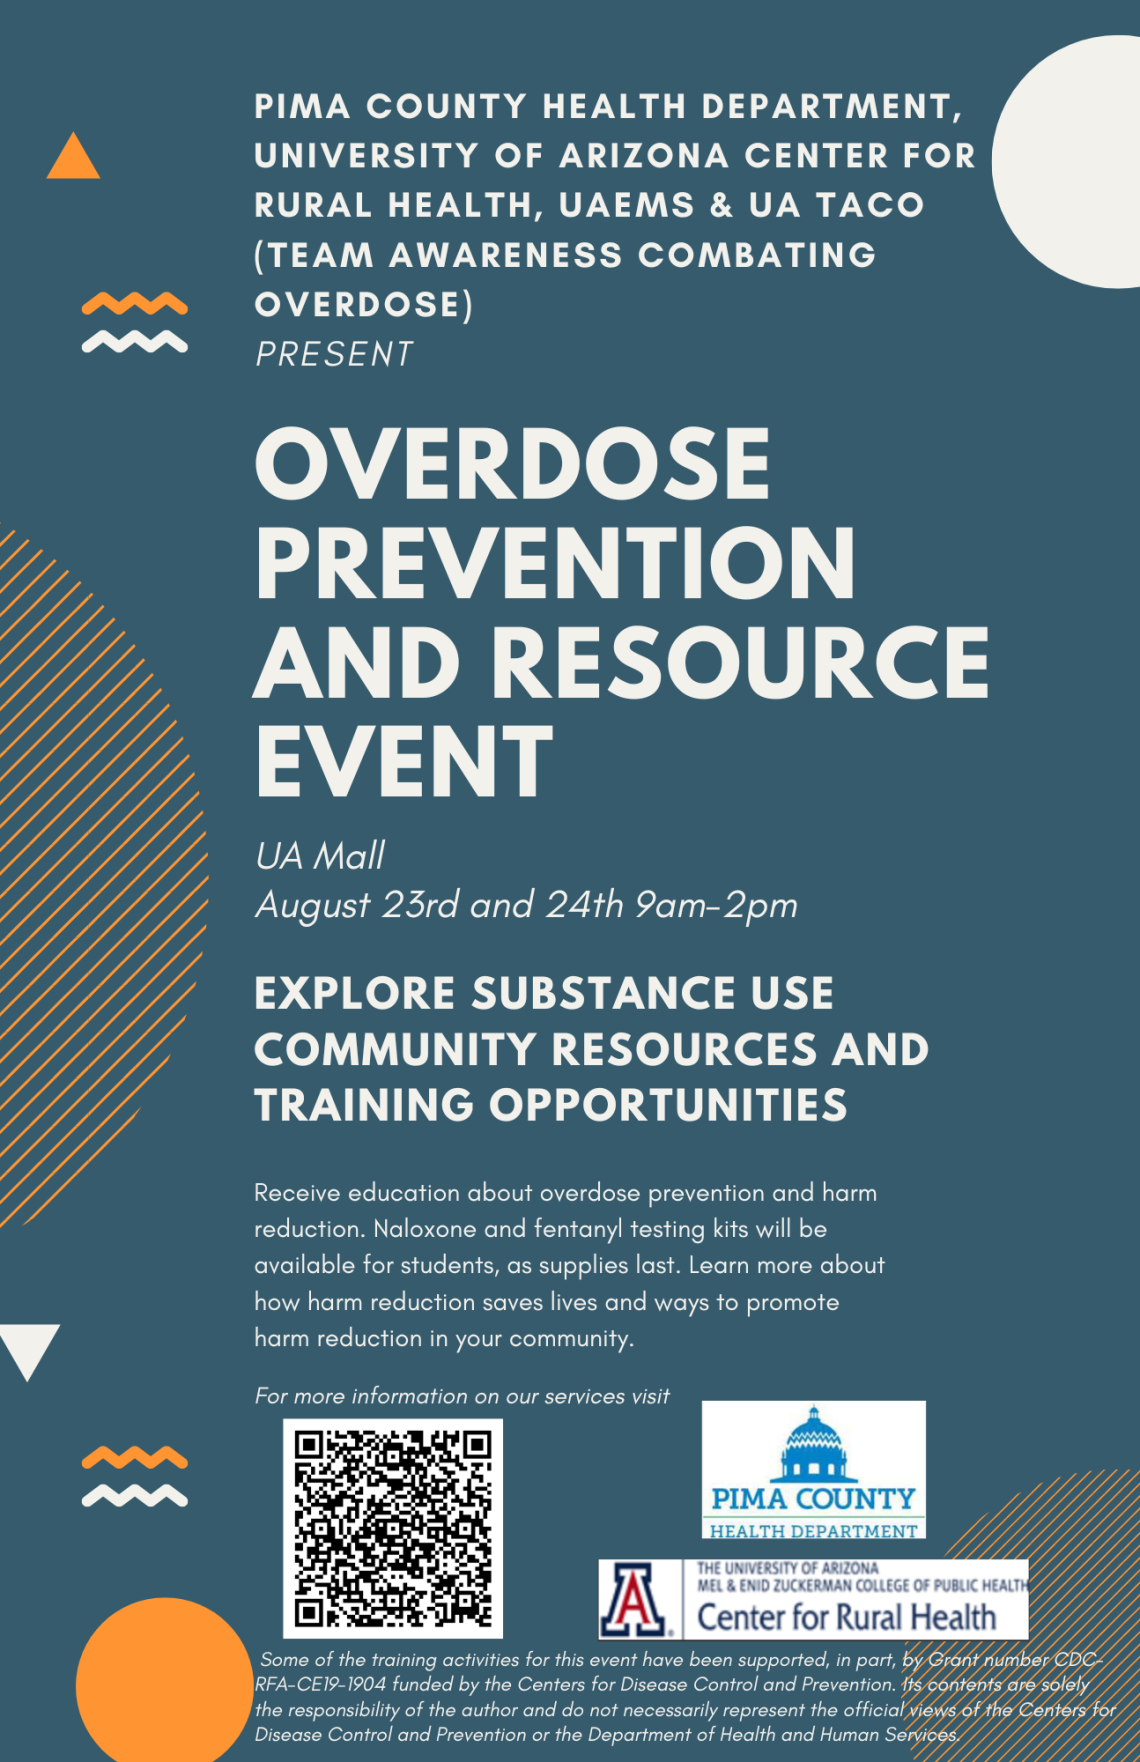 Overdose prevention and resource event